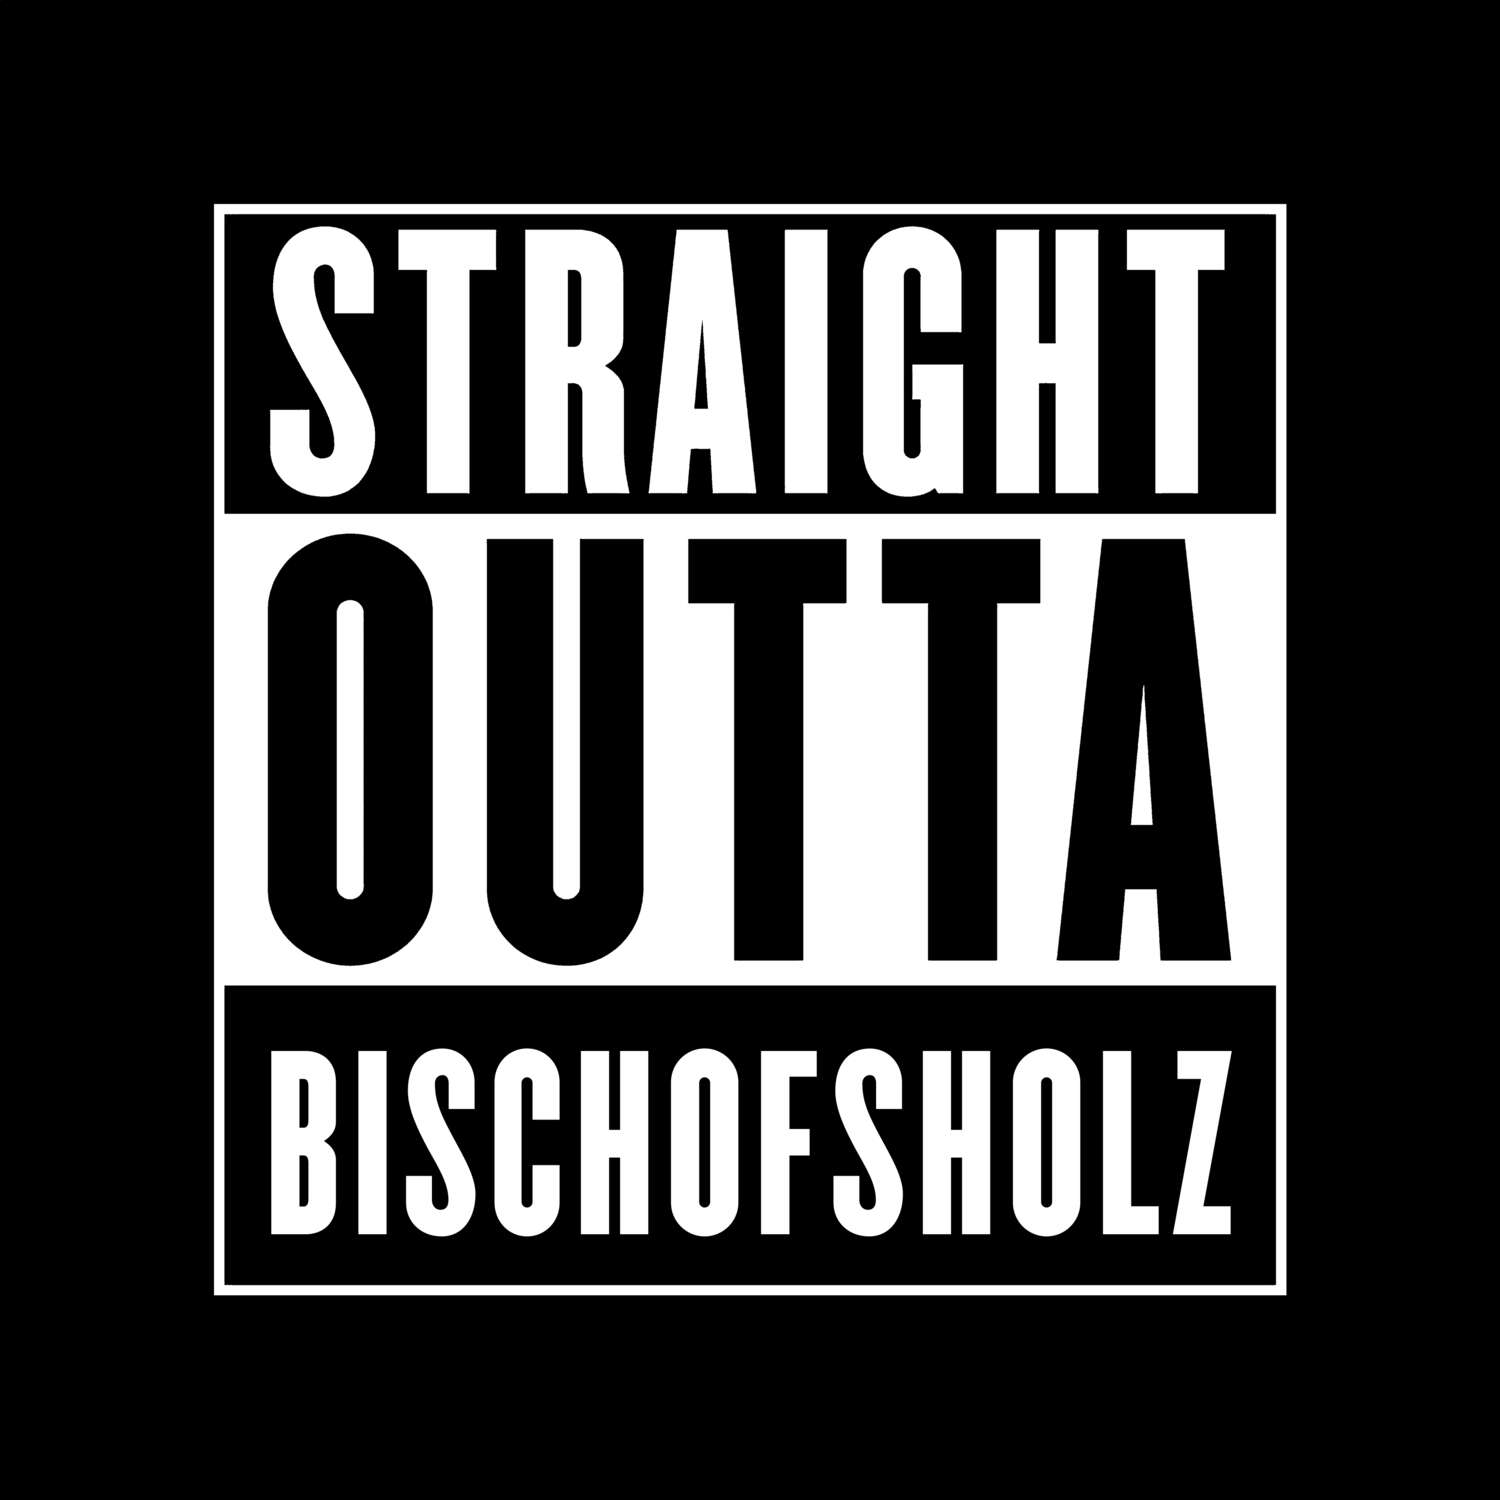 Bischofsholz T-Shirt »Straight Outta«